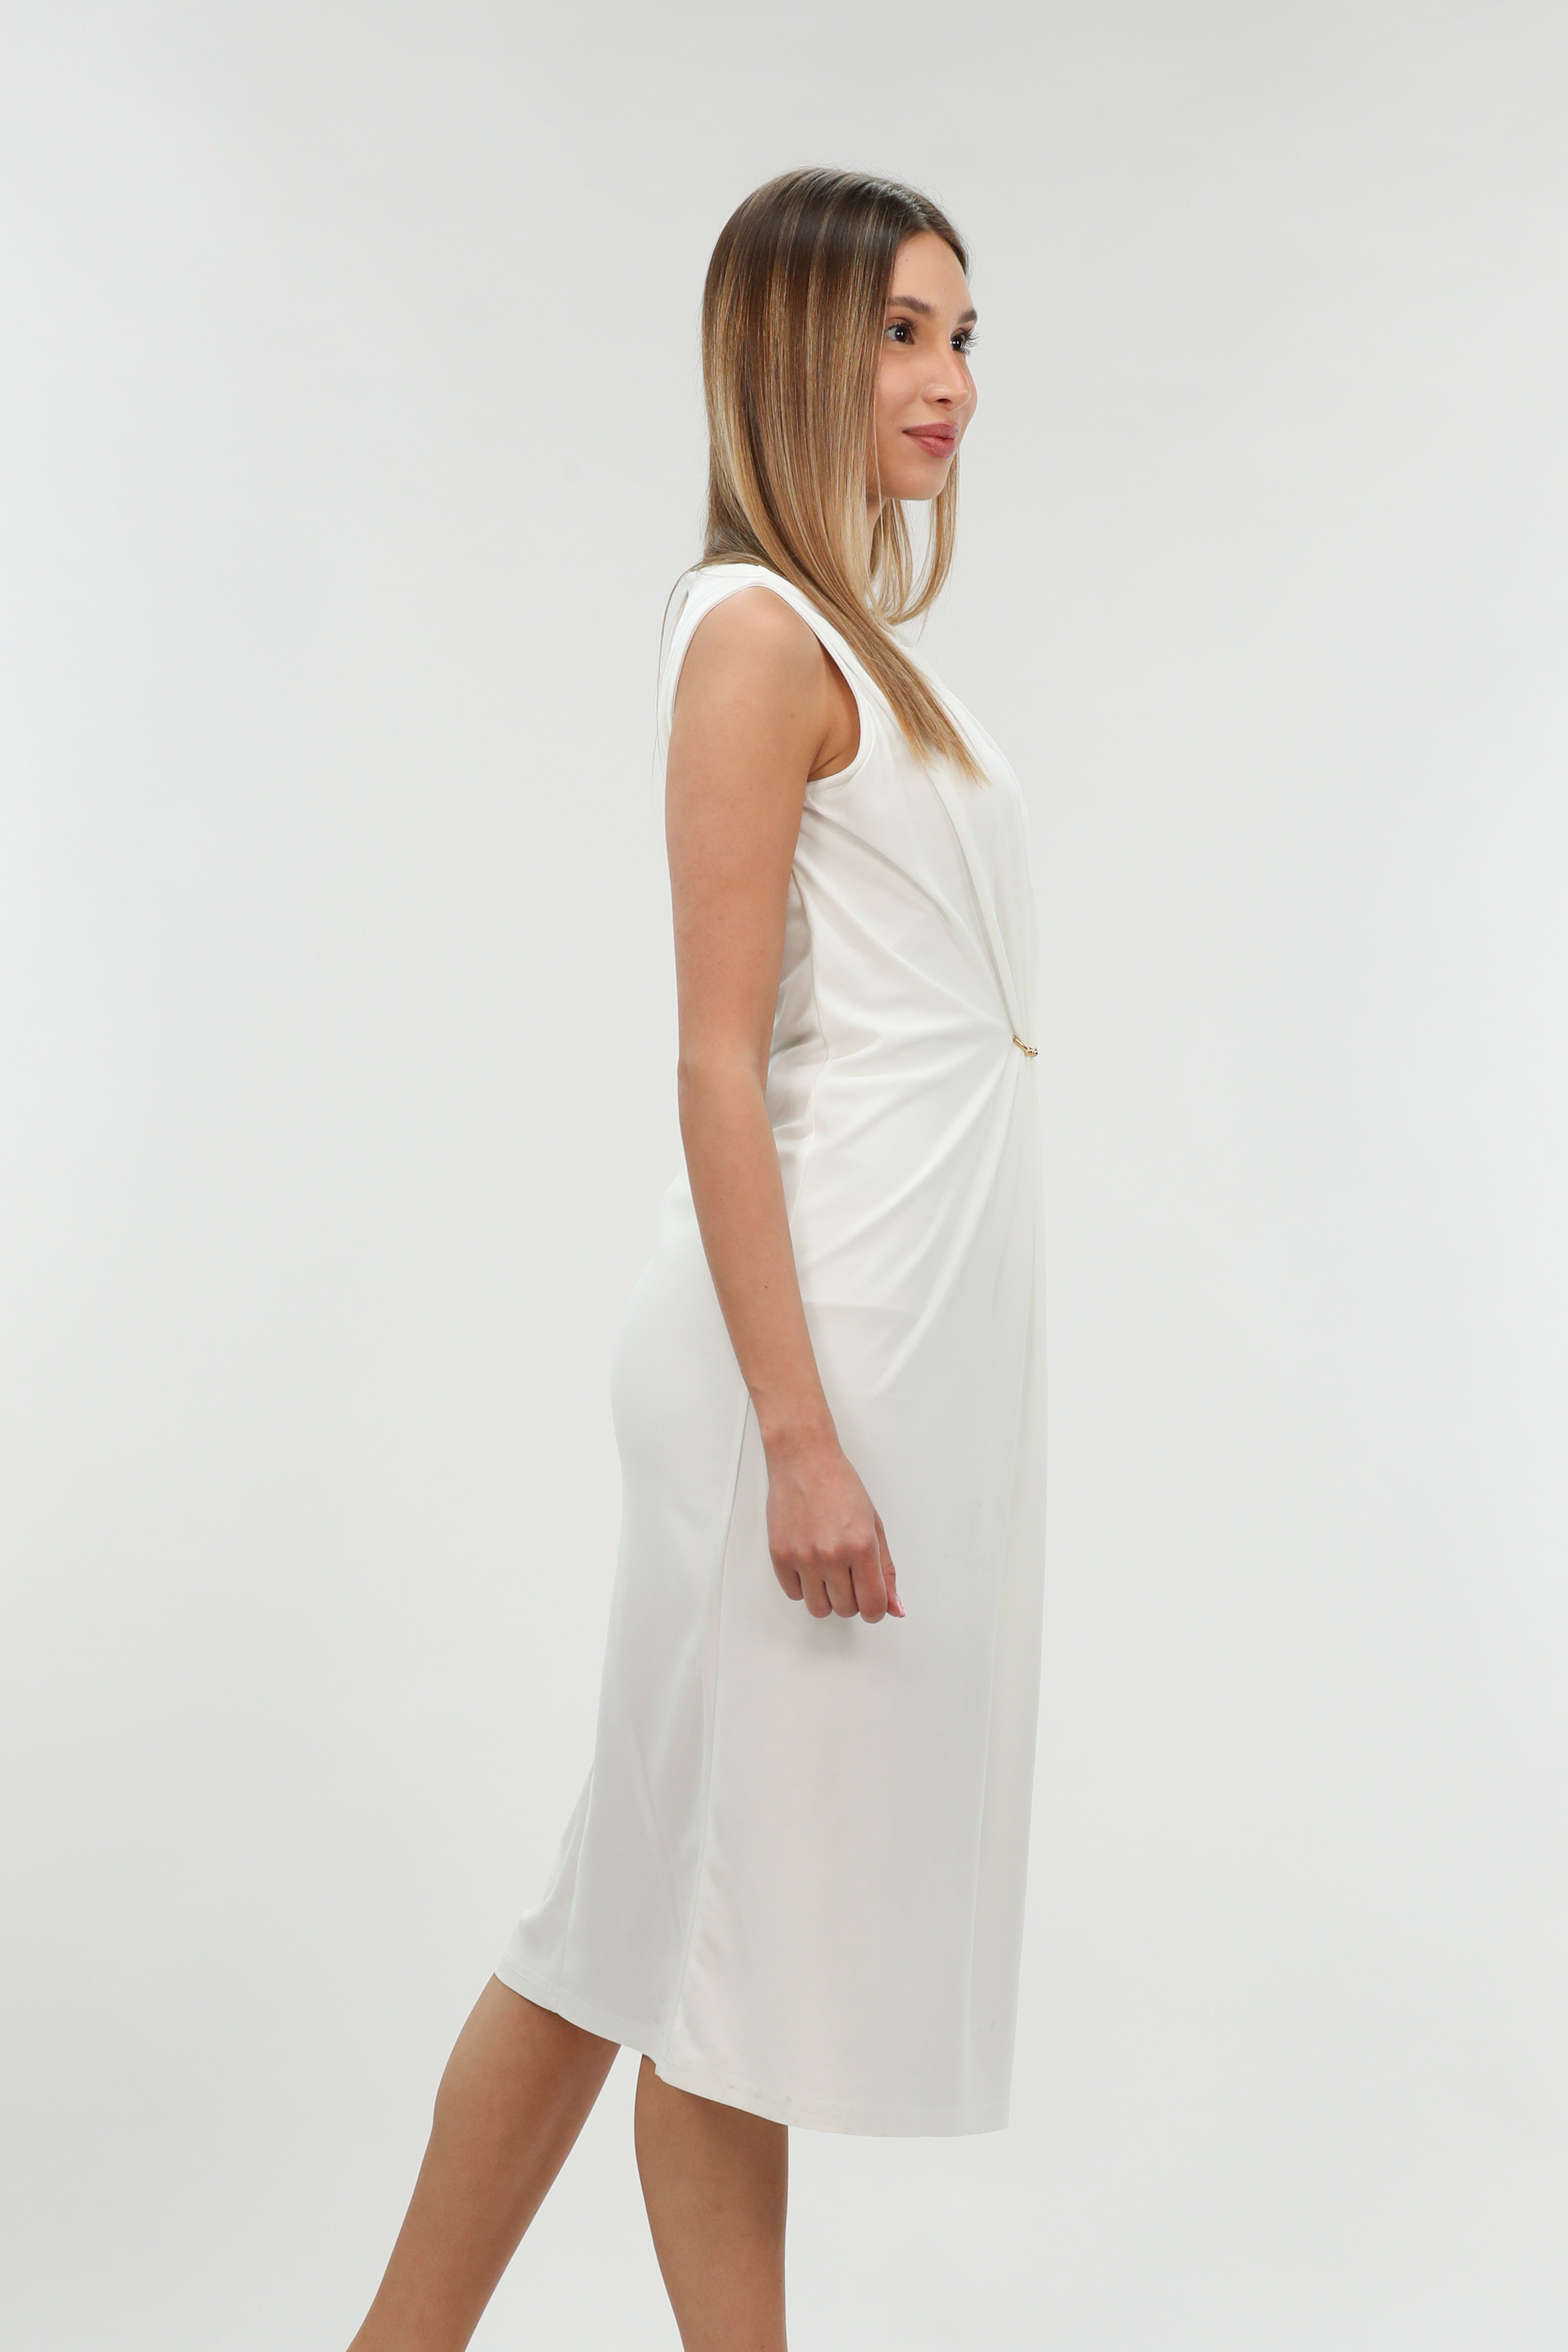 Classy White Simple Dress